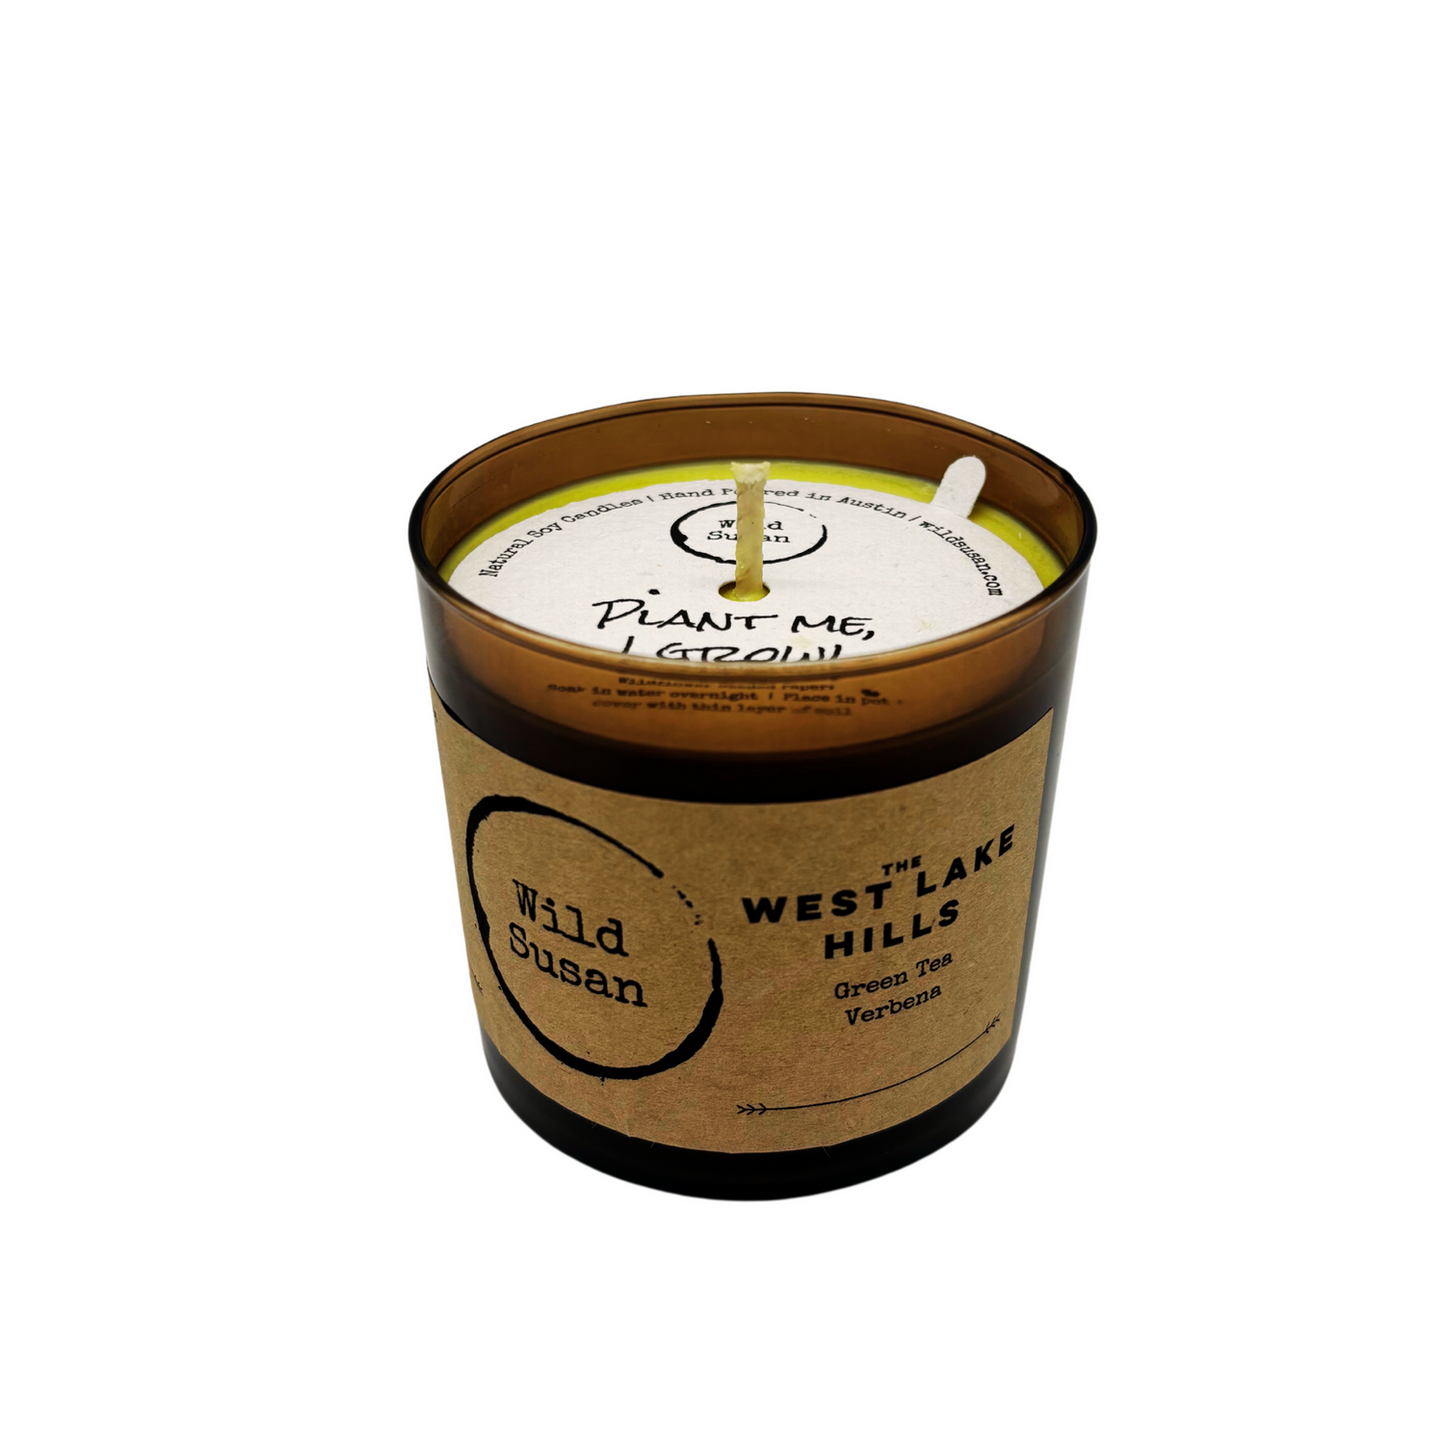 West Lake Hills [Green Tea Verbena] Soy Candle/Wax Melt